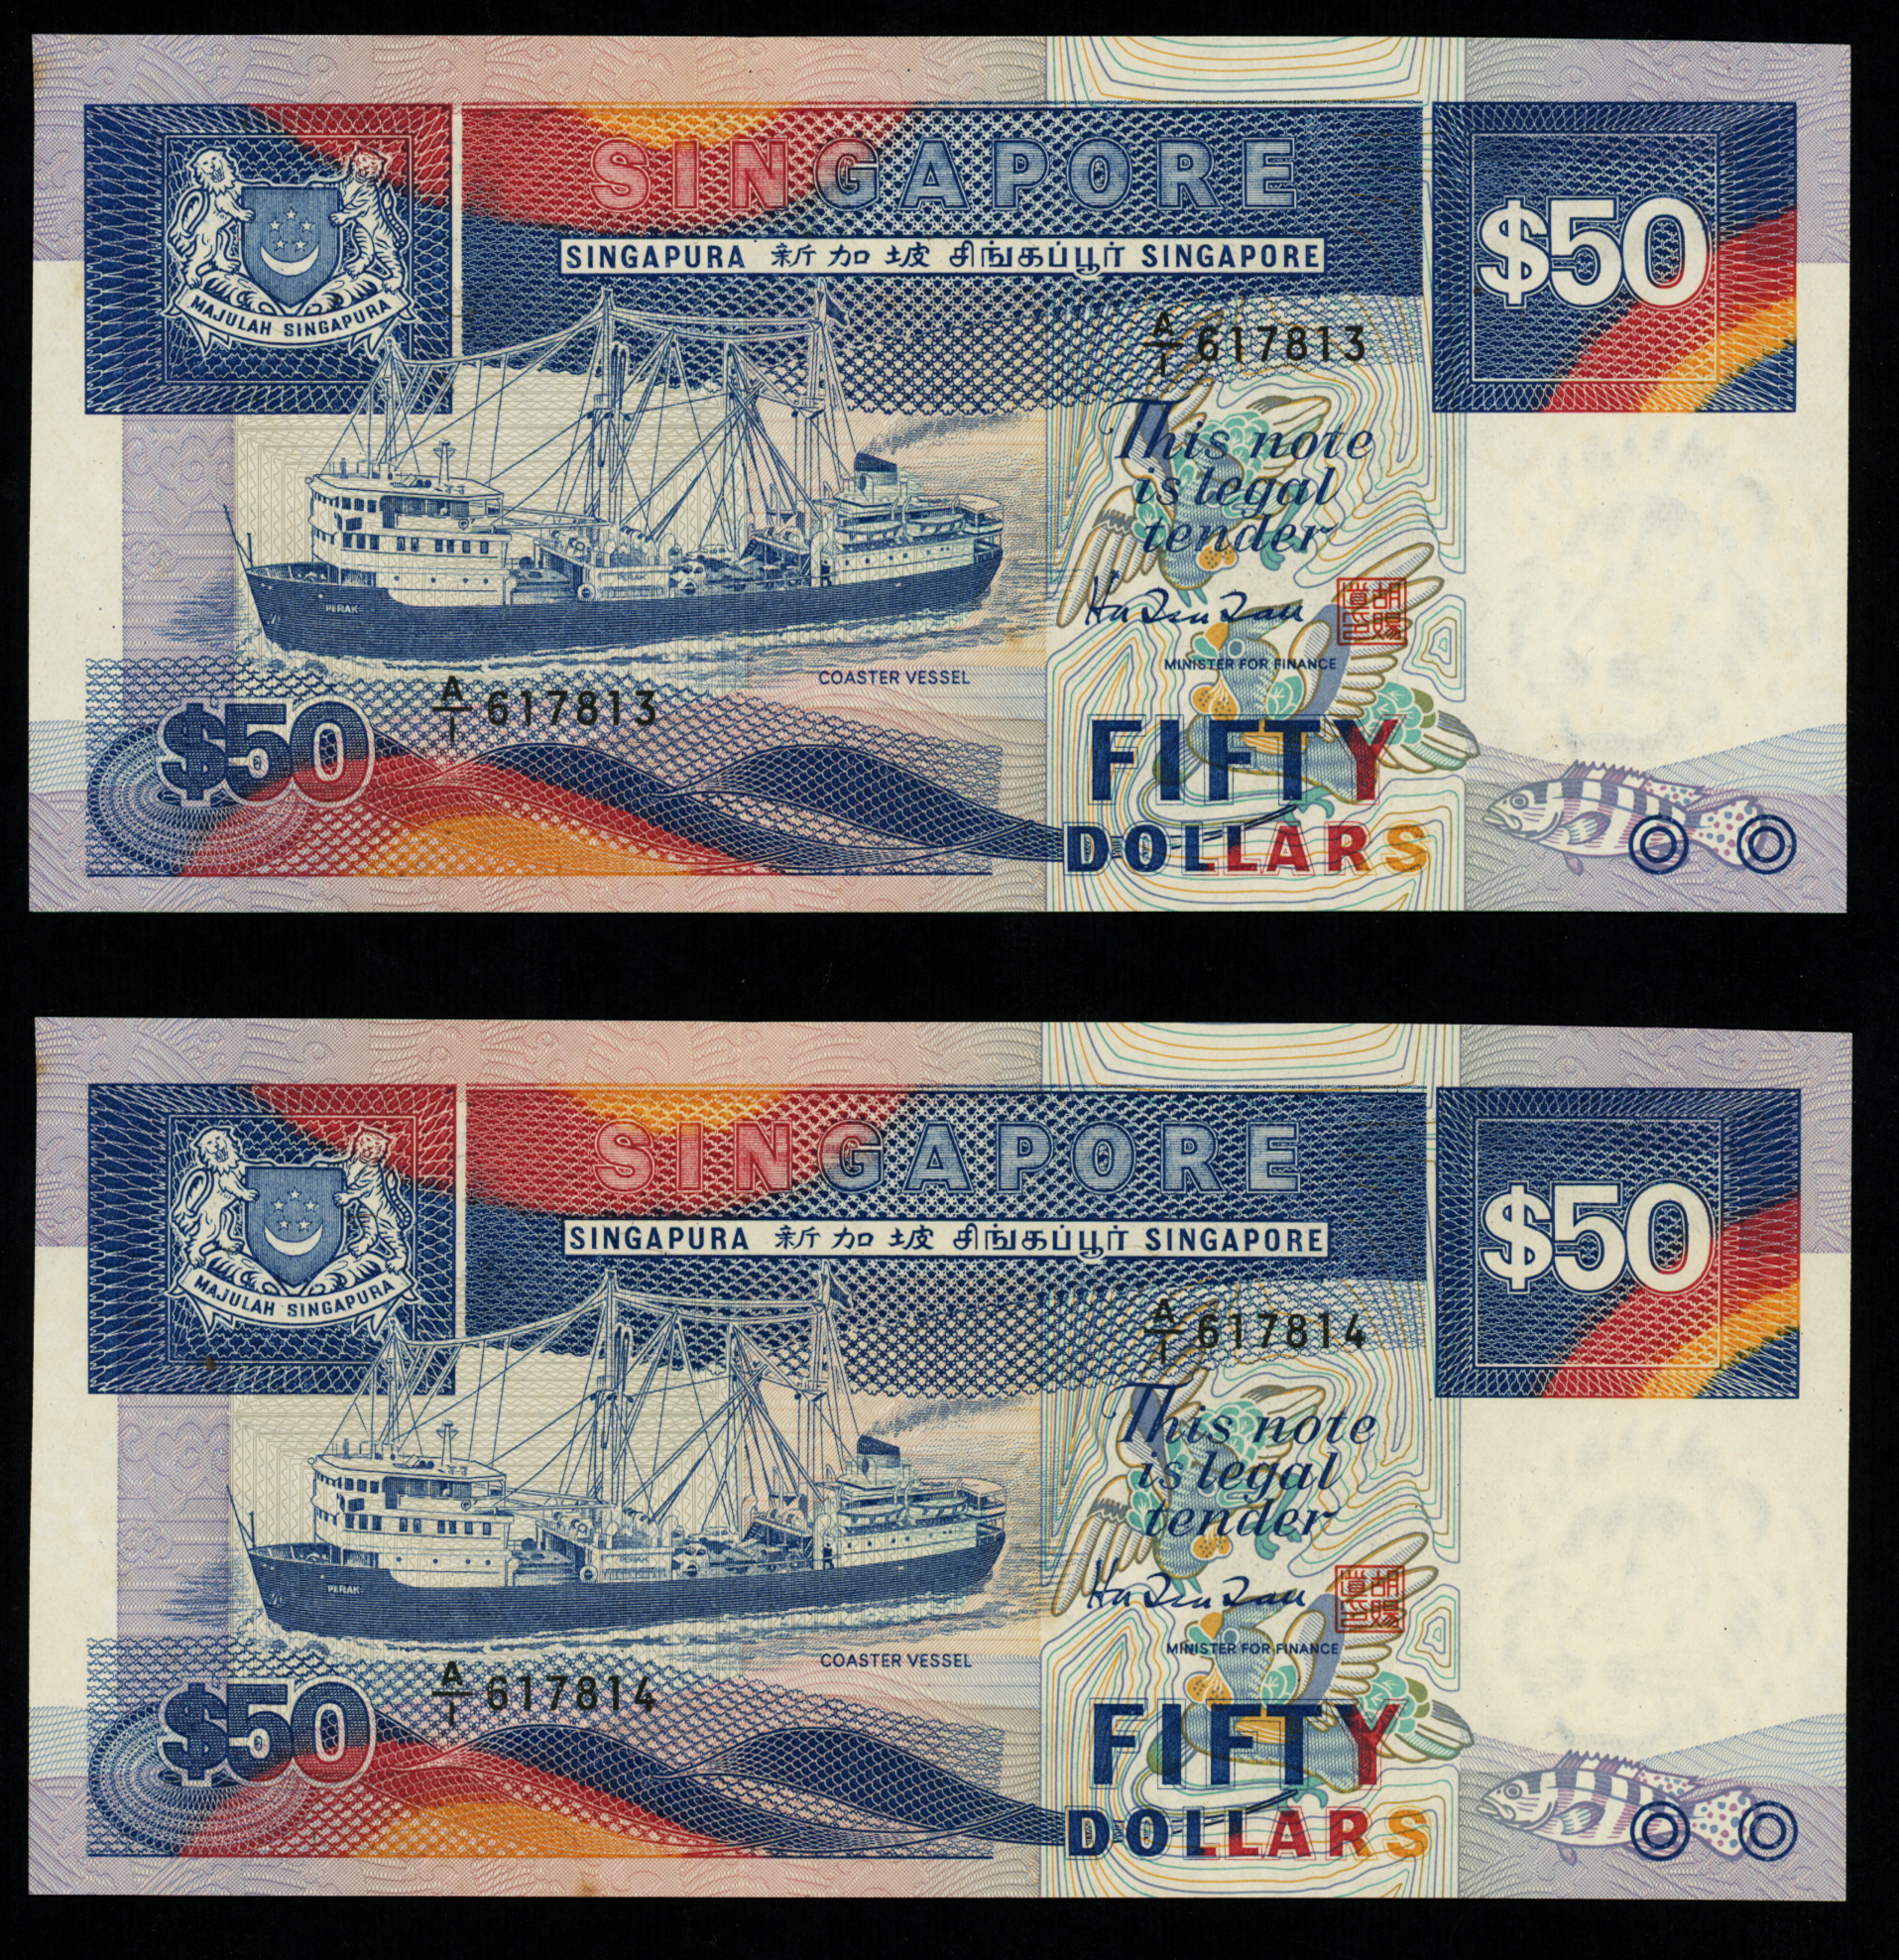 Singapore Ship 1985 $50 First prefix A/1 617813-814 UNC, foxing 